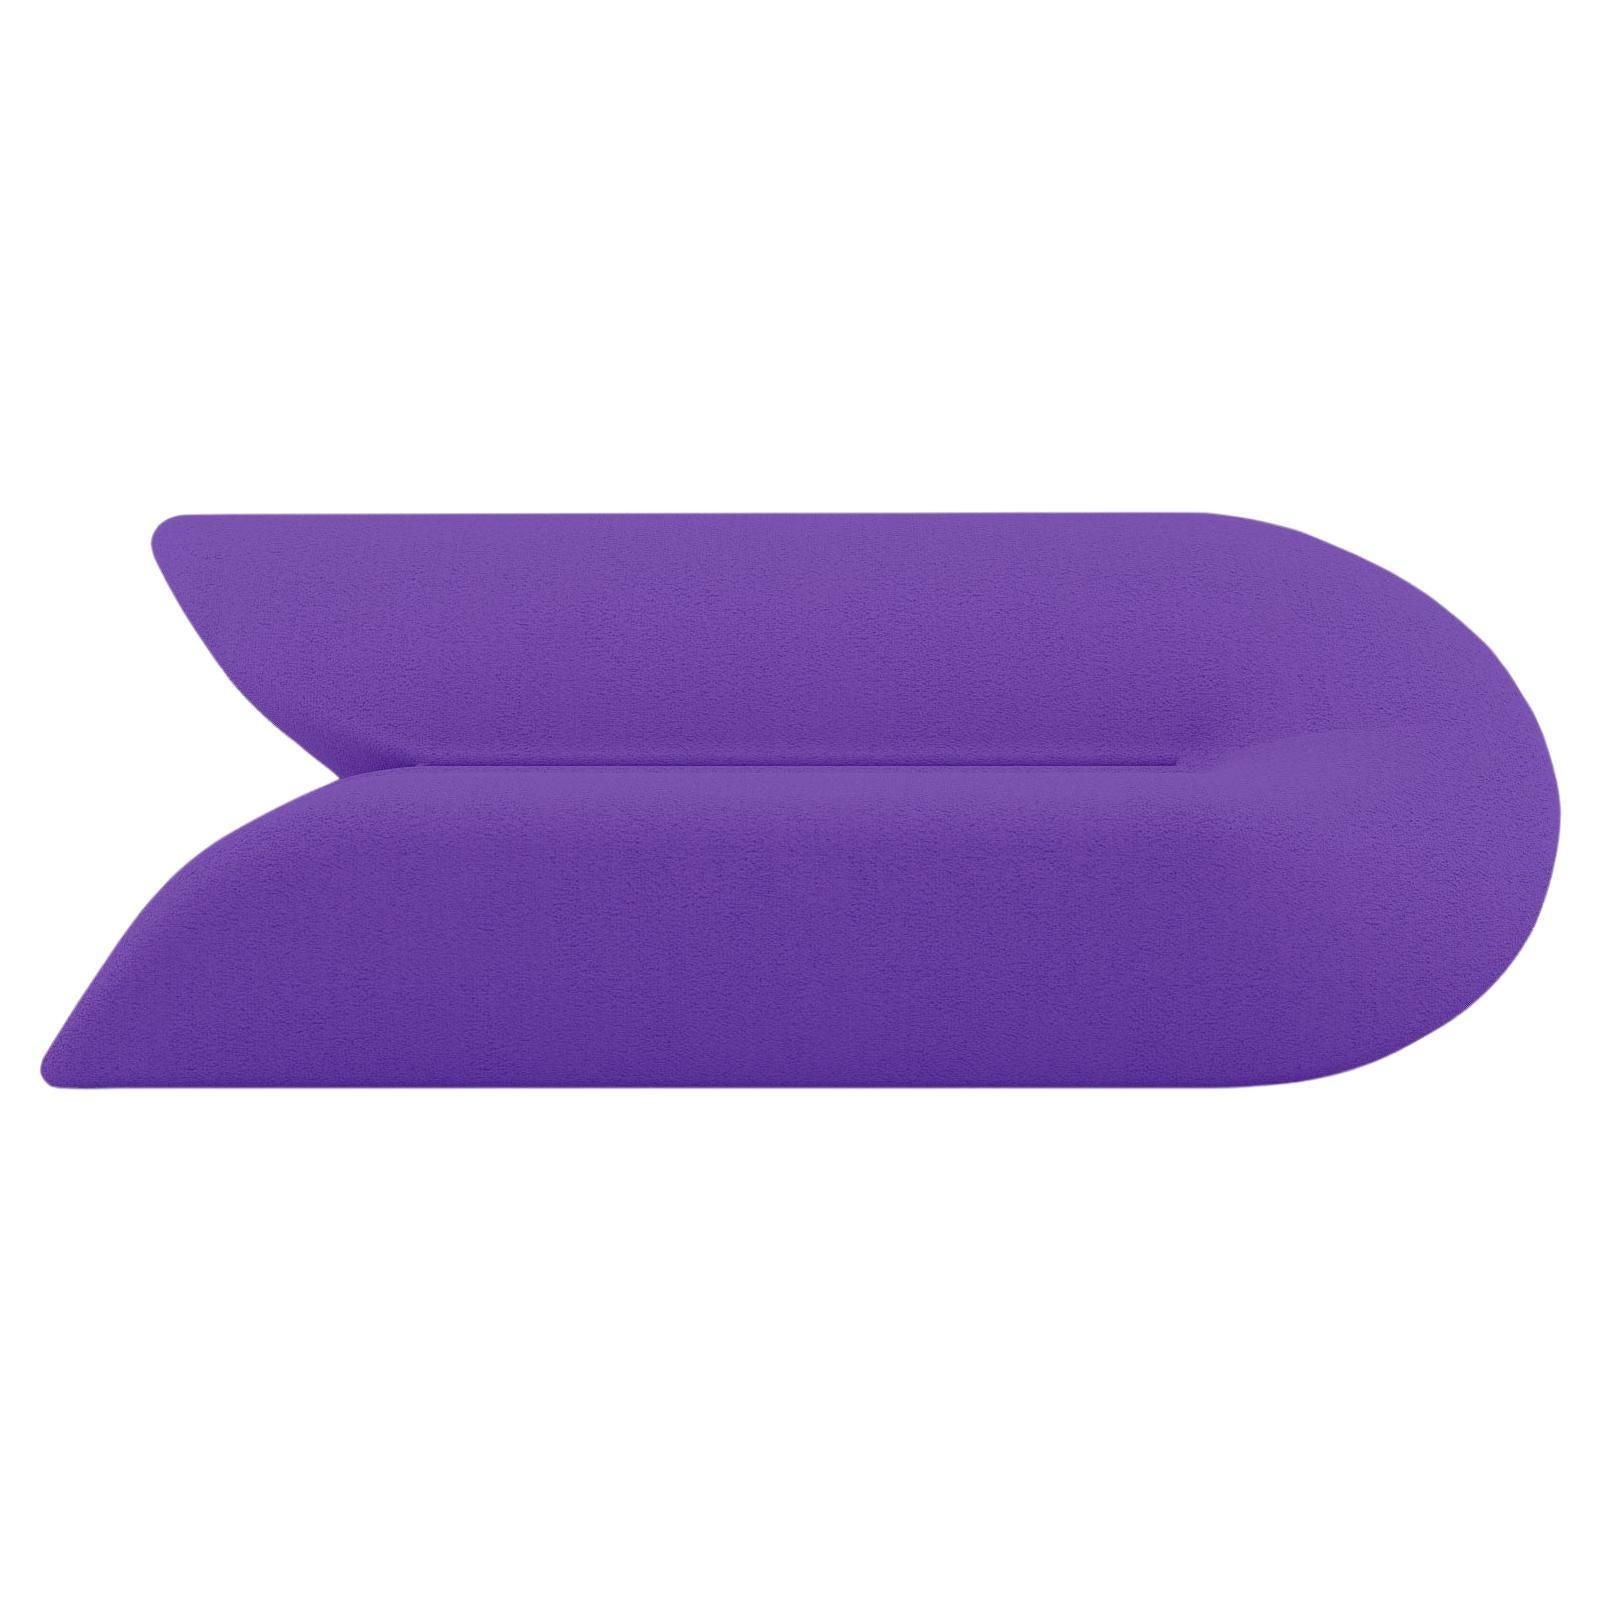 Delta Sofa - Modern Ultra Violet Upholstered Three Seat Sofa For Sale